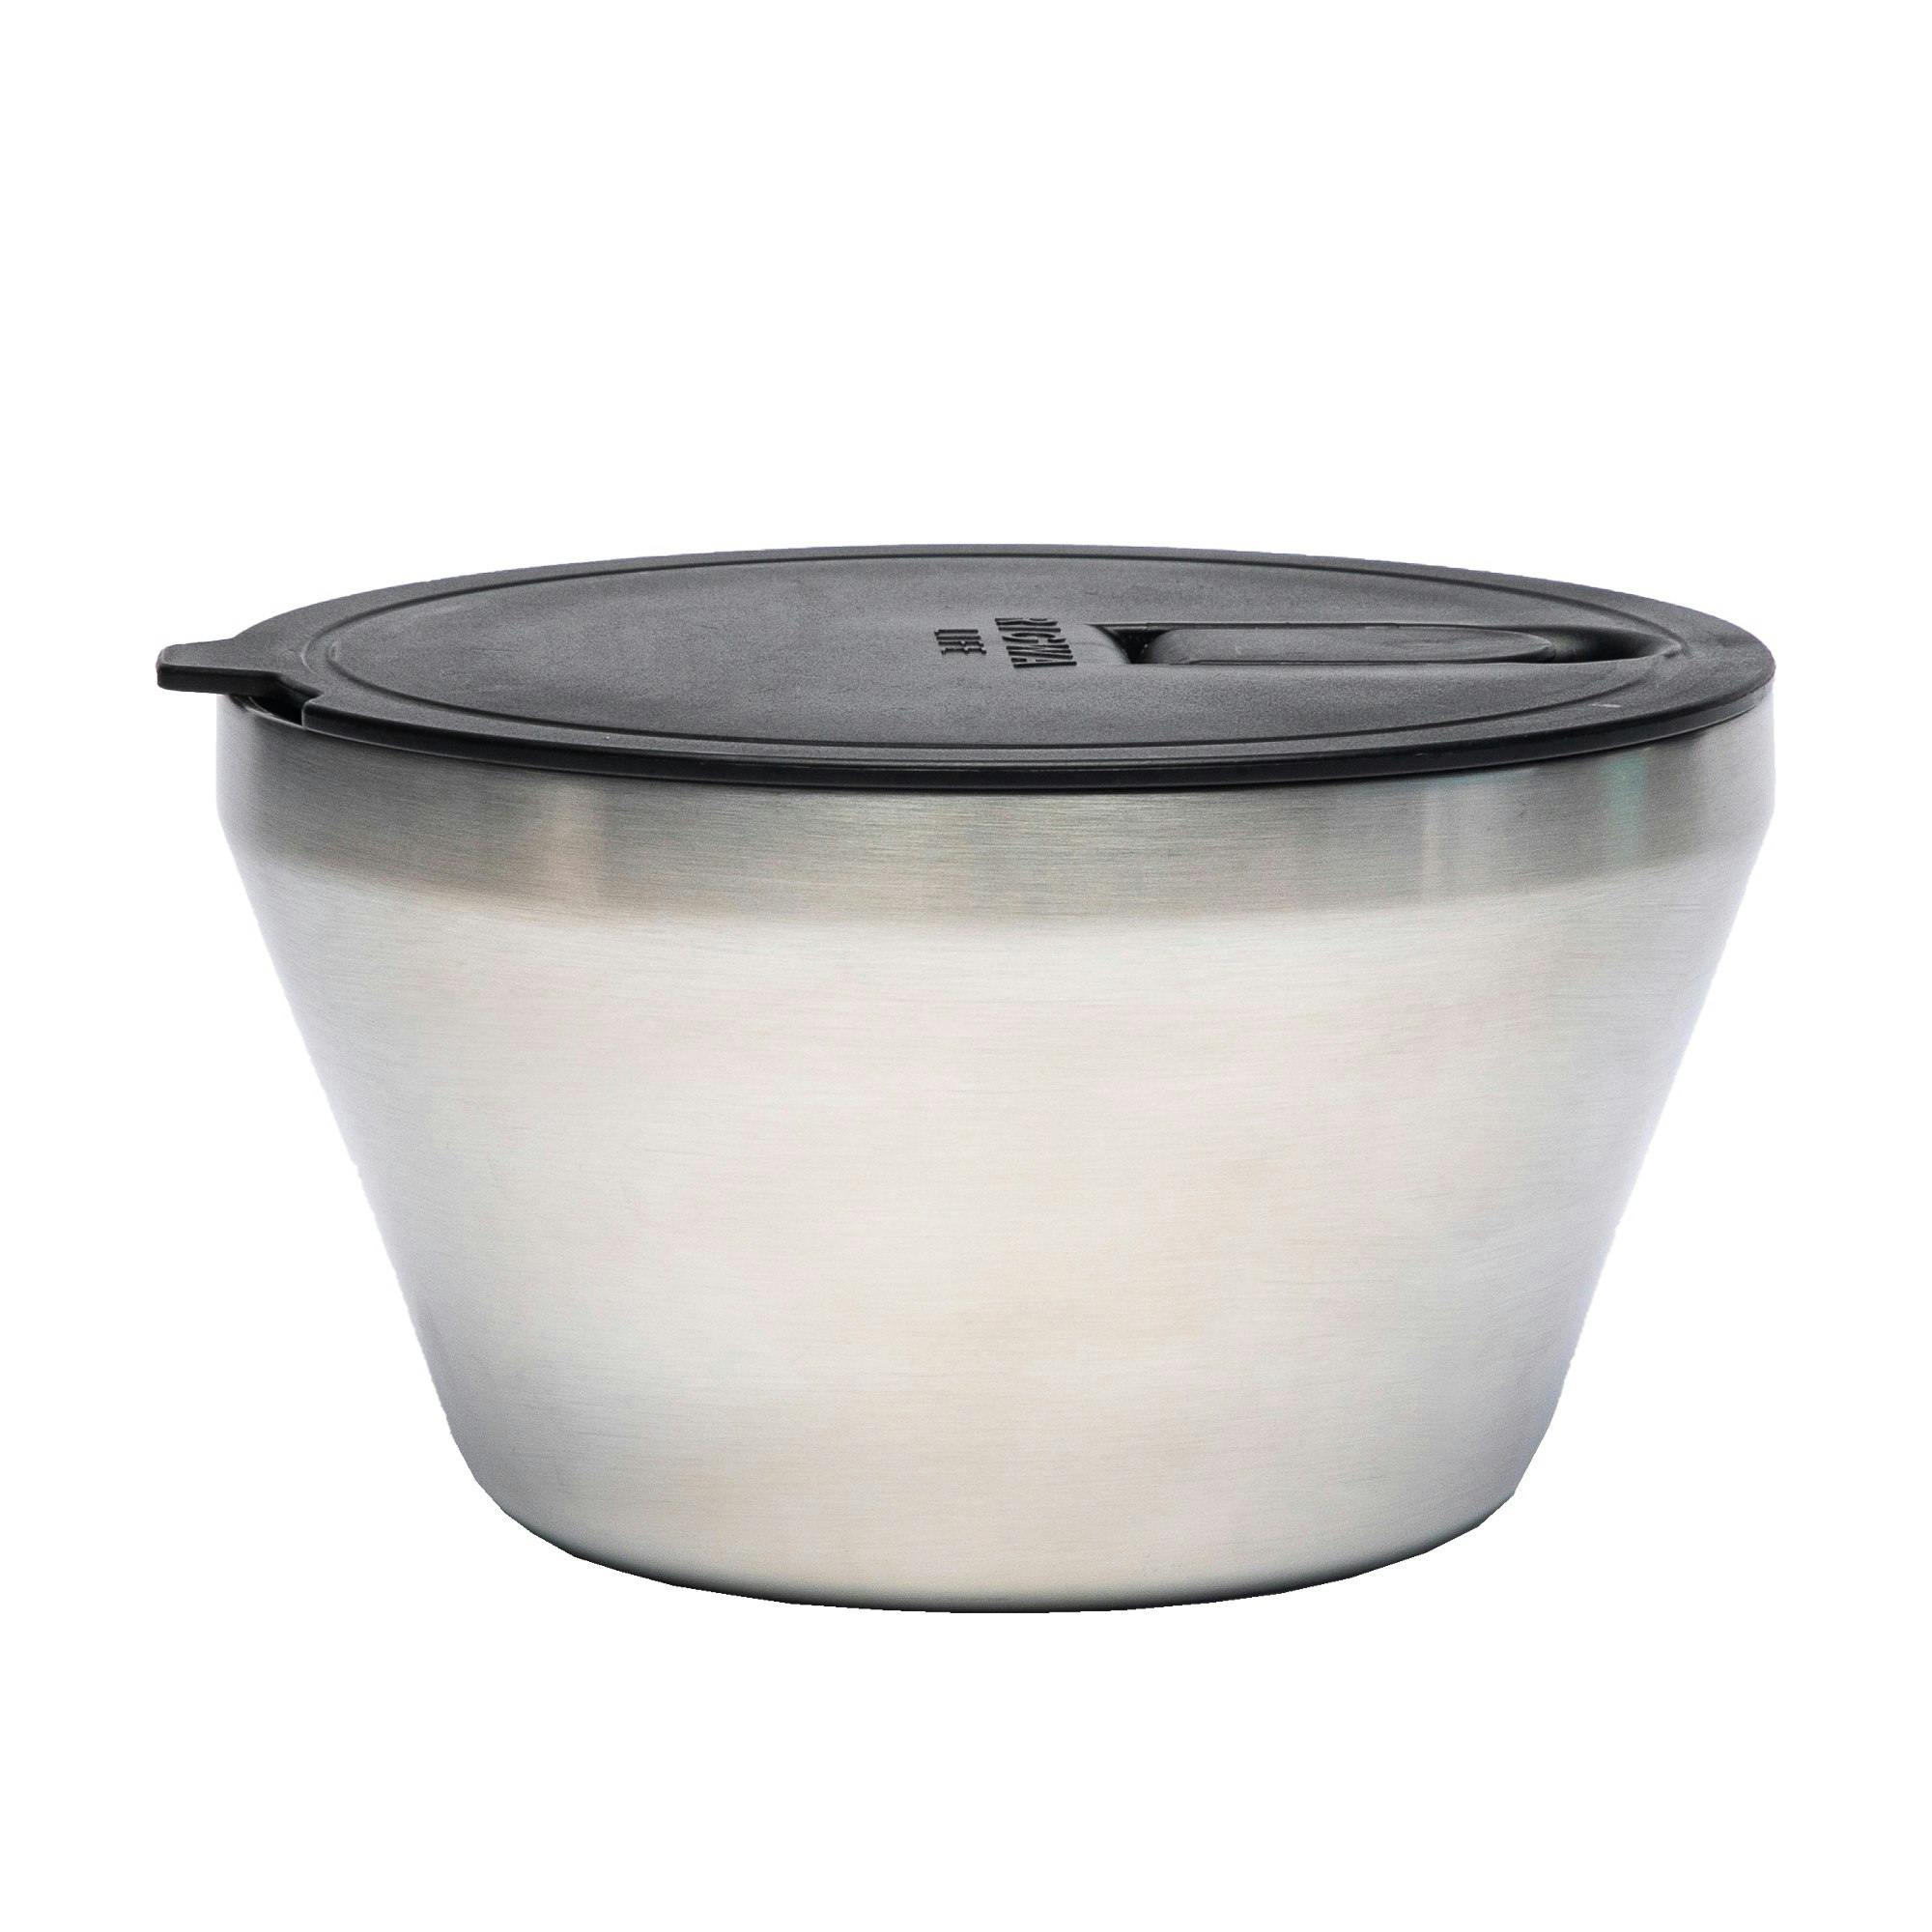 Rigwa Life Rigwa 1.5 Stainless Steel Insulated Bowl - Marine, Sale